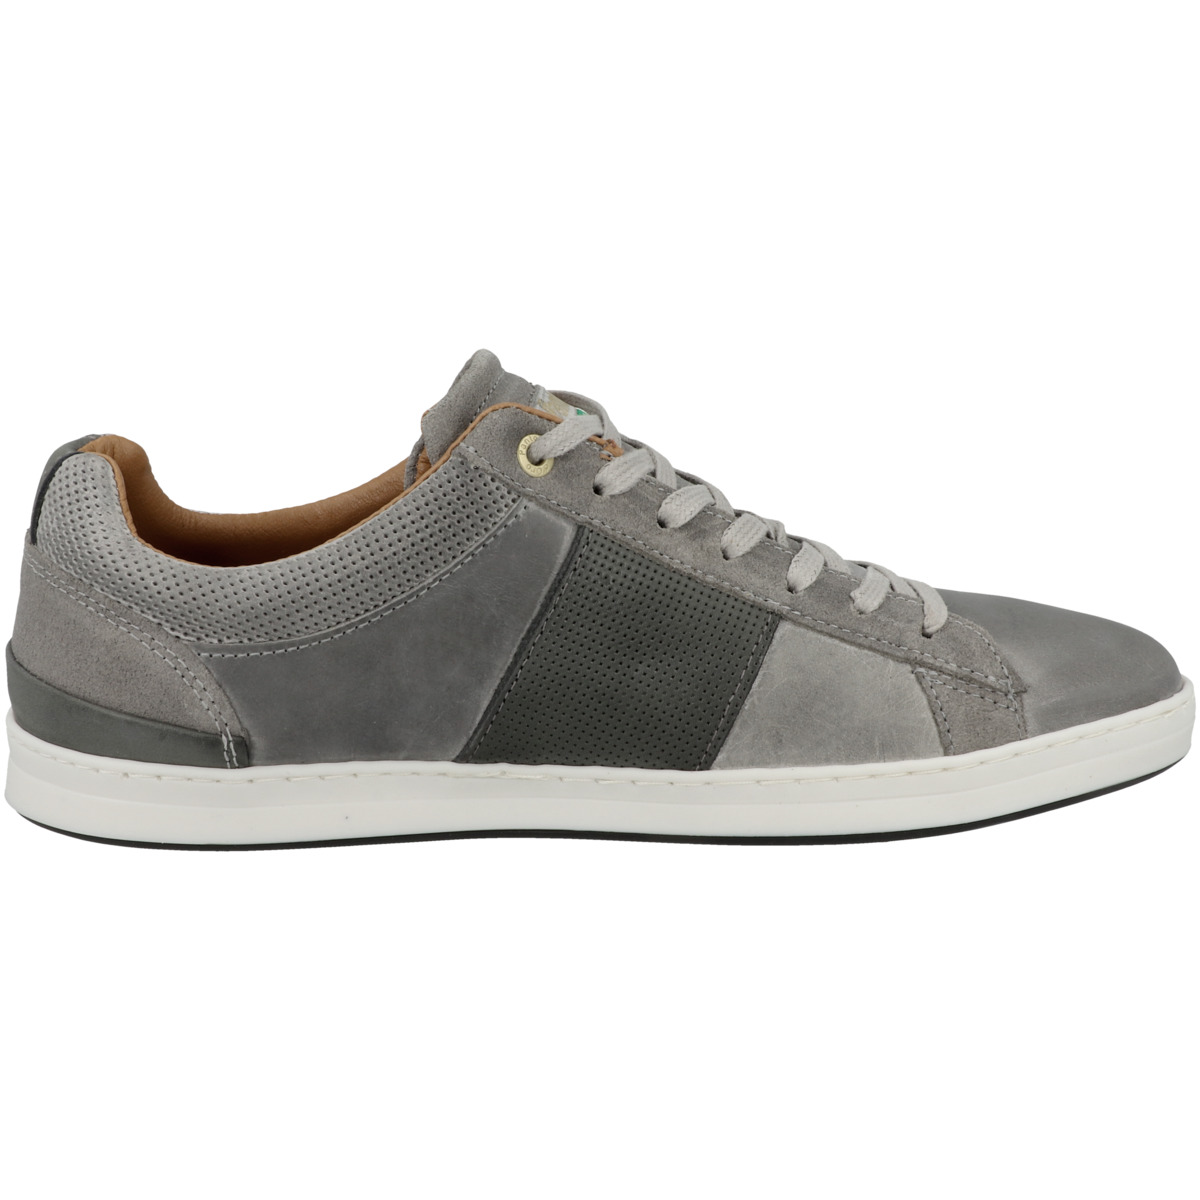 Pantofola d Oro Torretta Uomo Low Sneaker grau